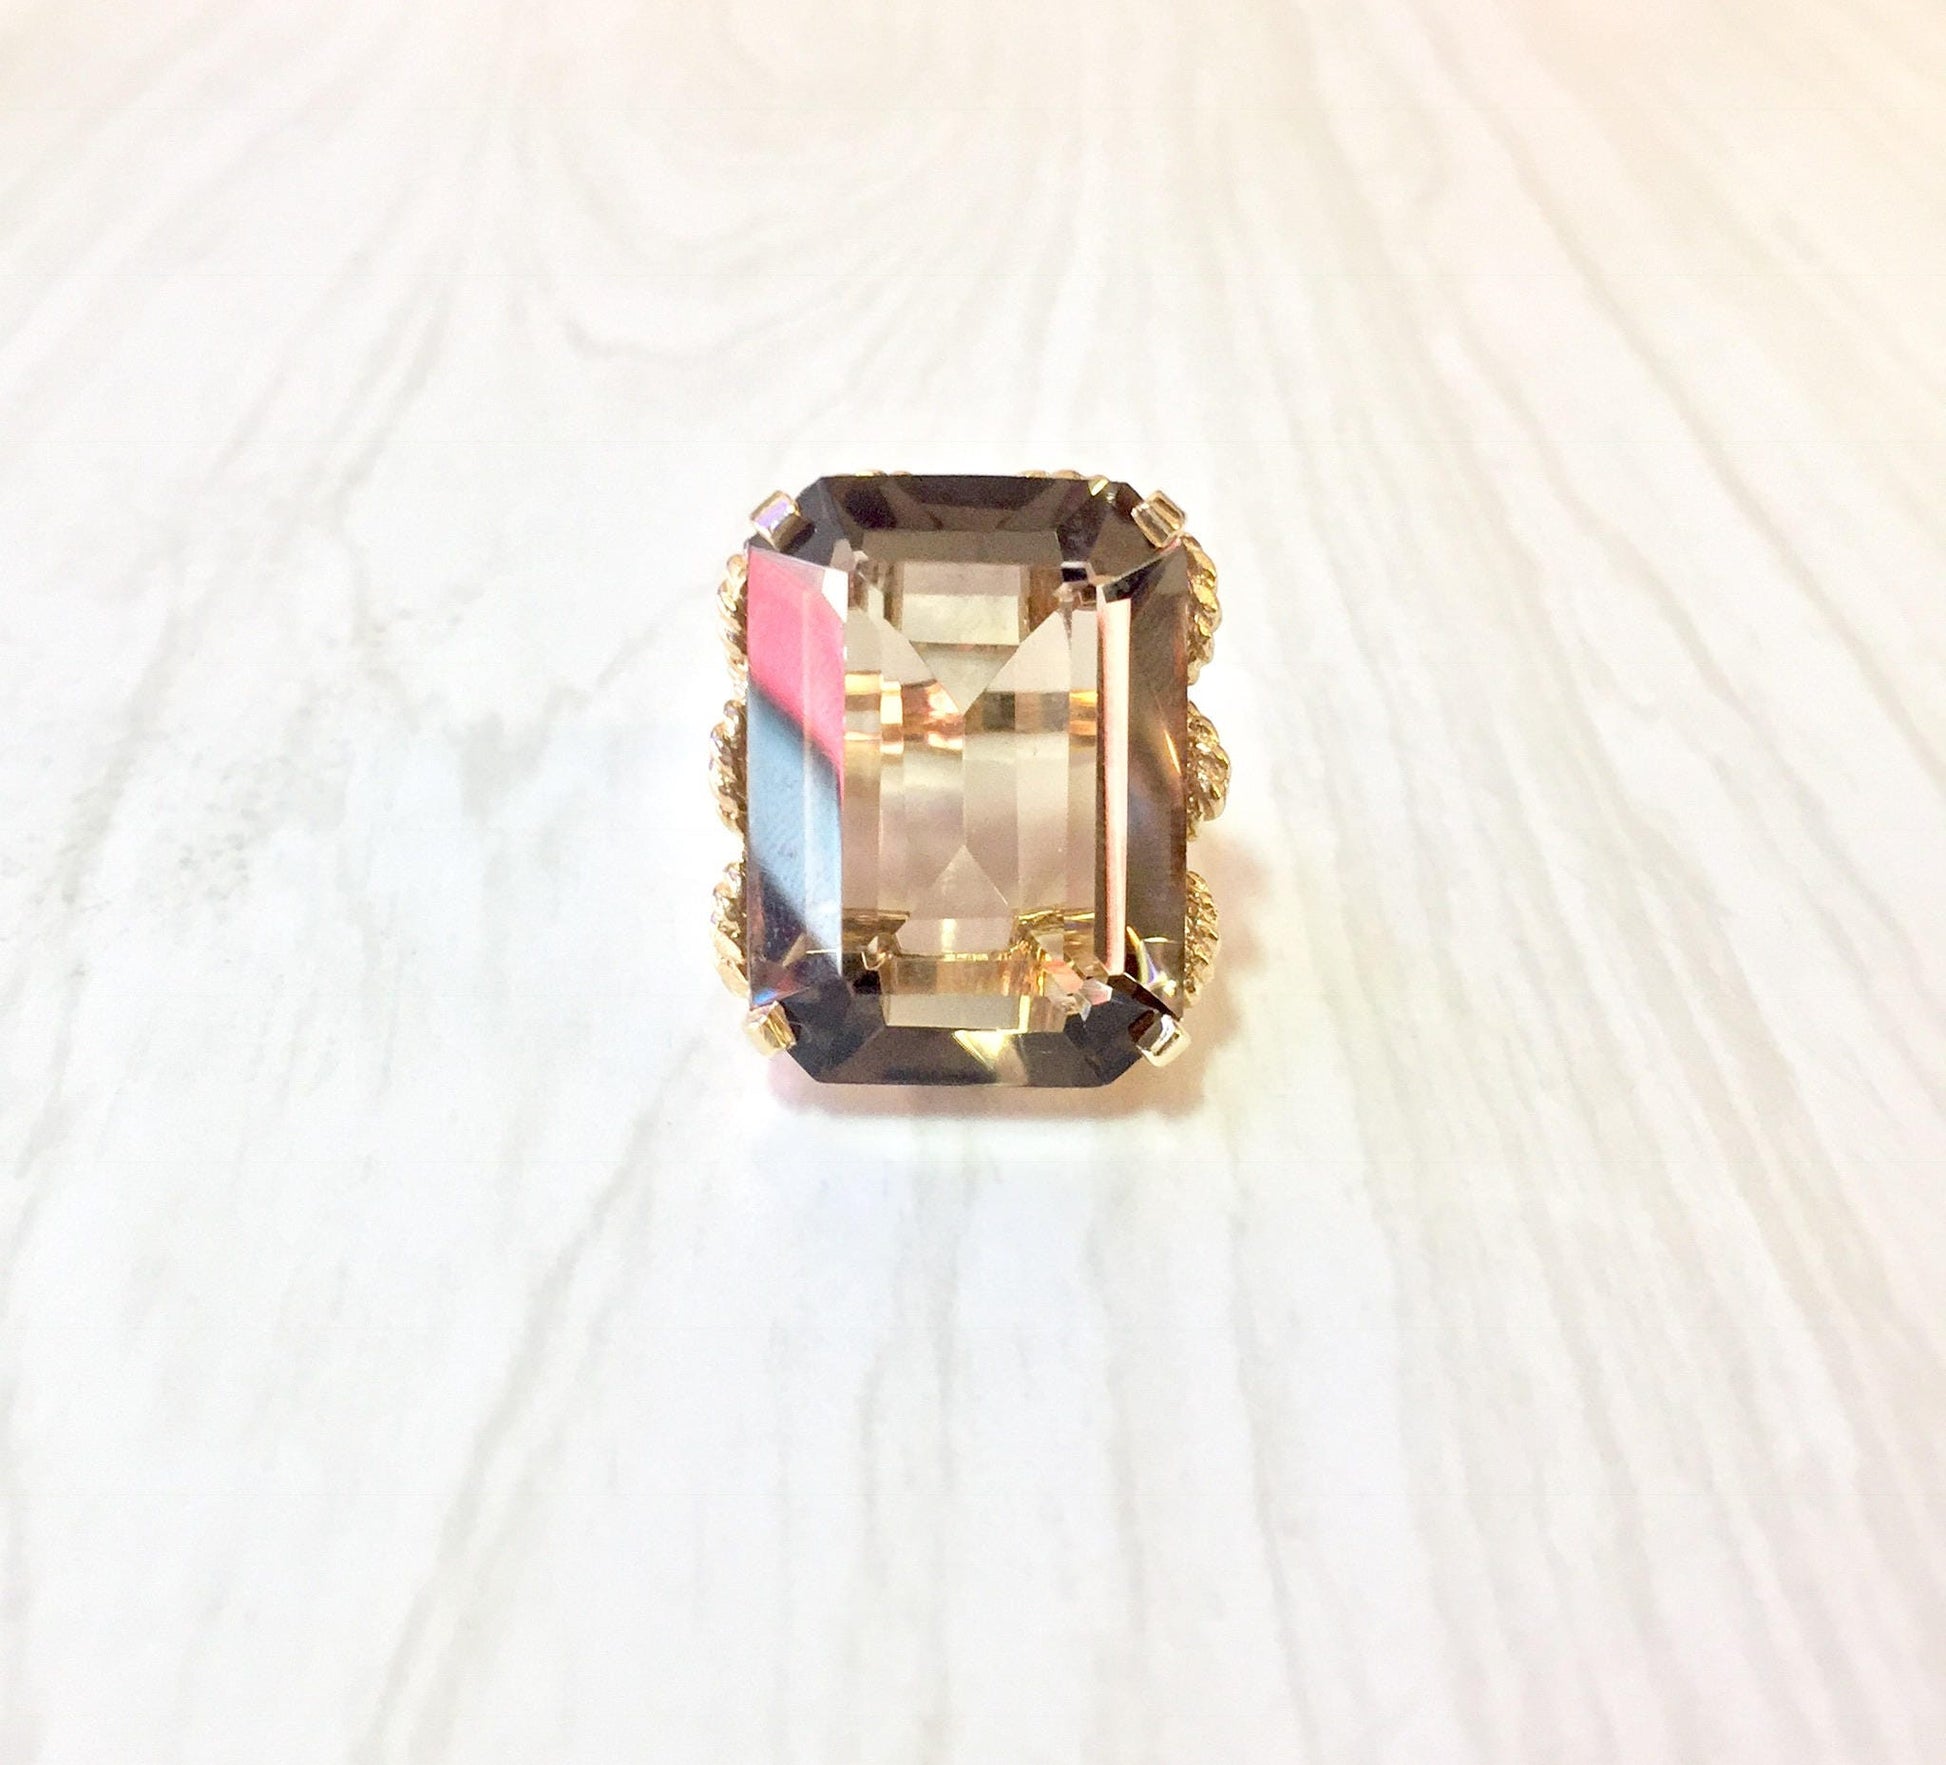 14 karat yellow gold emerald cut smoky quartz cocktail ring, size 7 US, statement jewelry gift